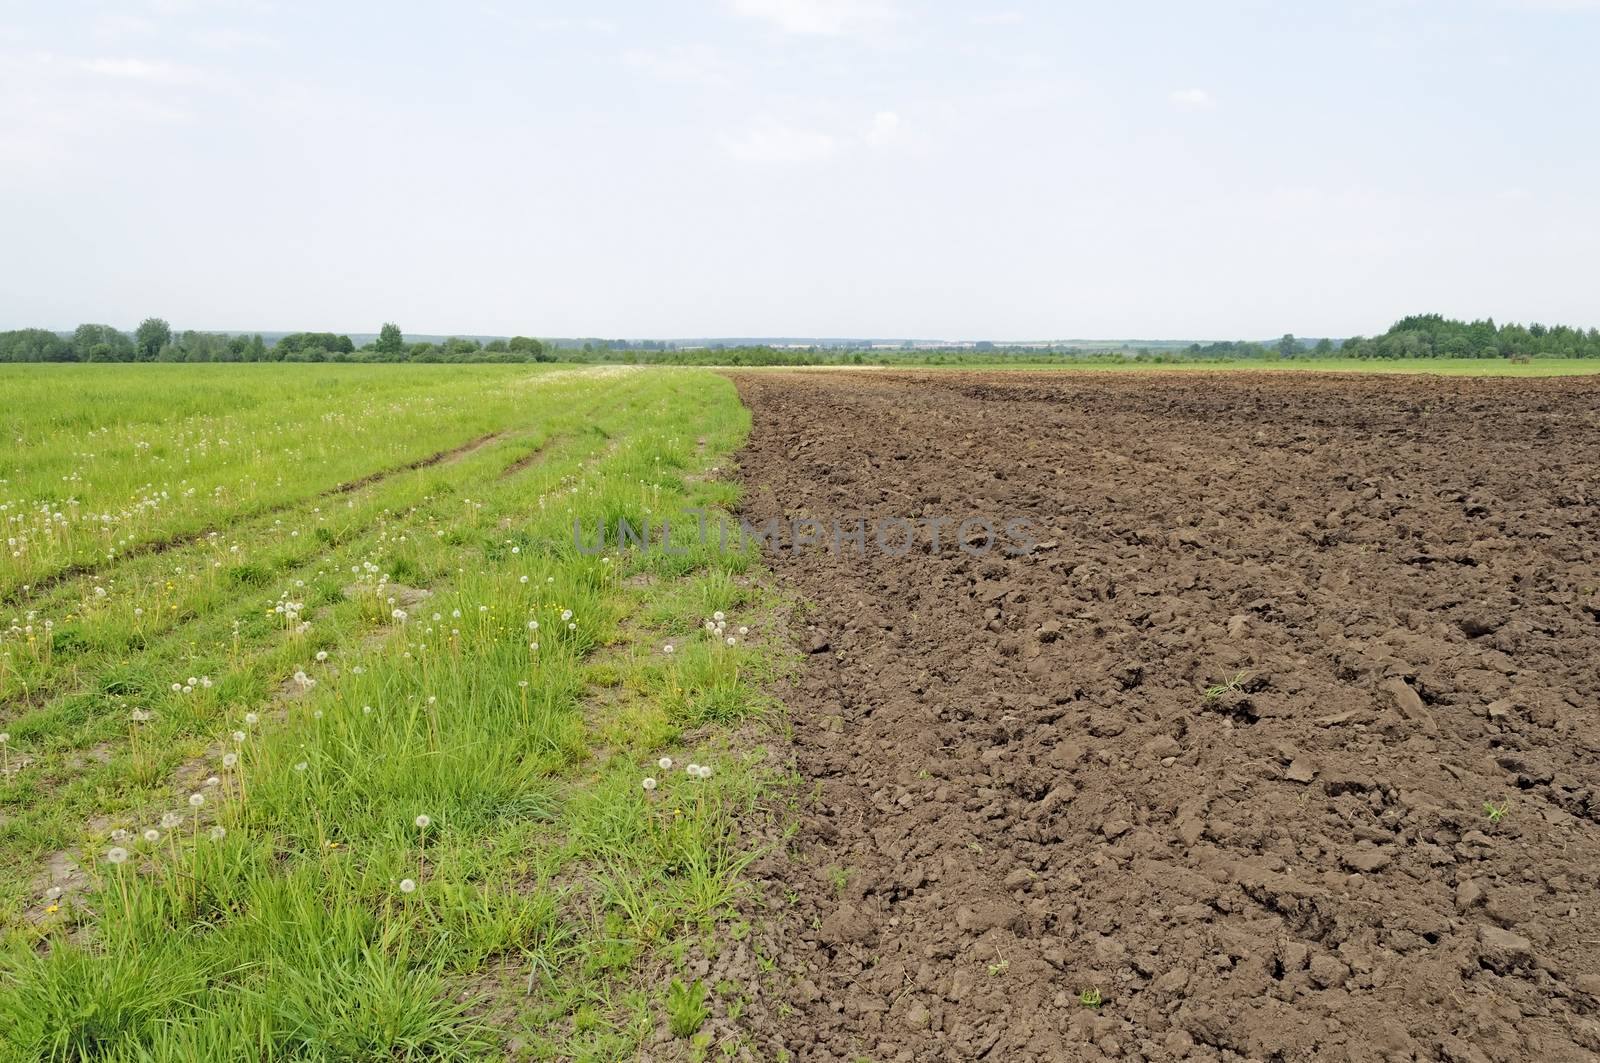 Freshly plowed farm field before sowing, spring time